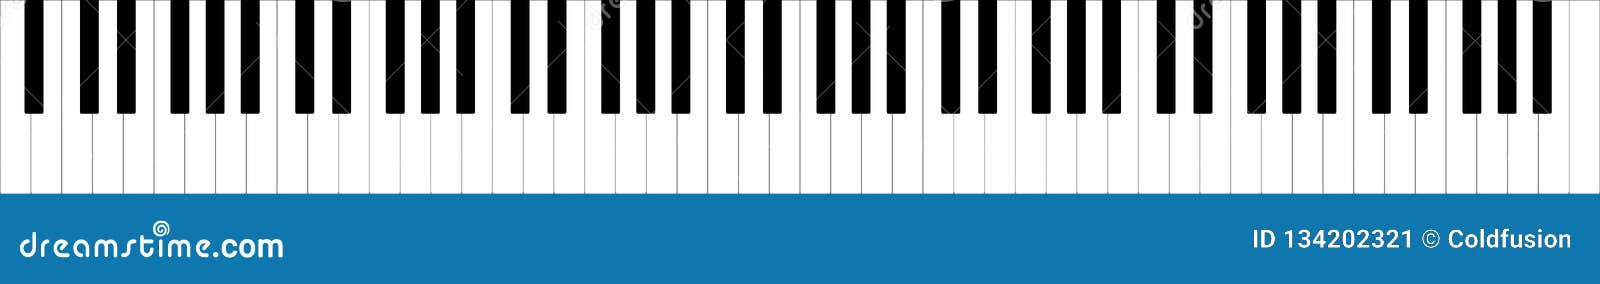 Classical Full Piano Keyboard. 88 Keys/ Vector Illustration. Stock